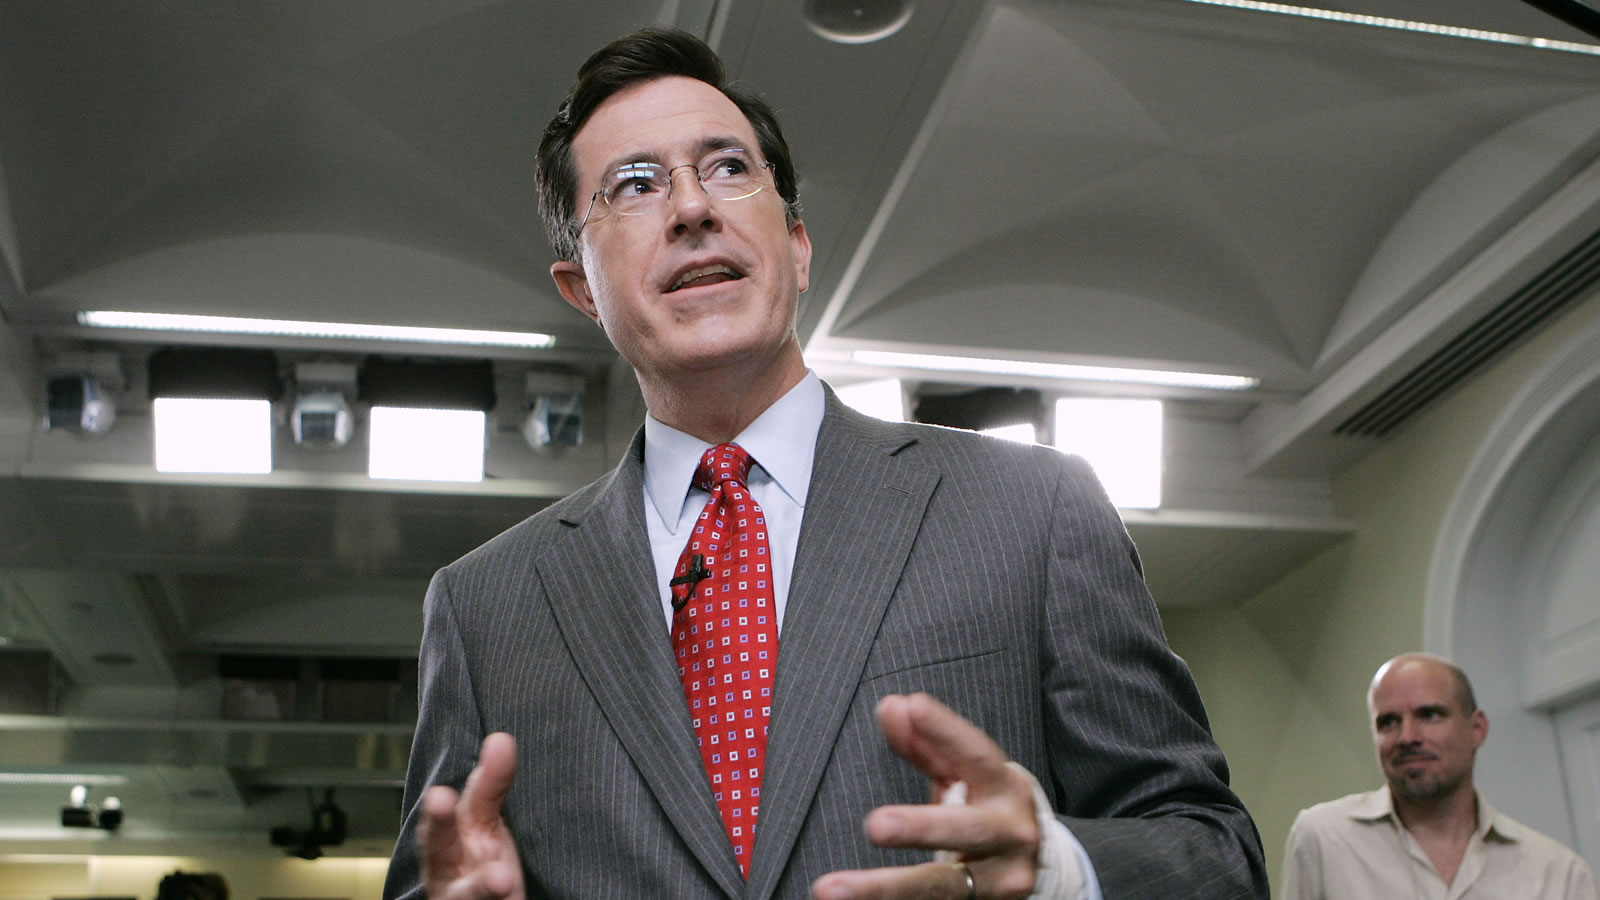 Stephen Colbert-2007